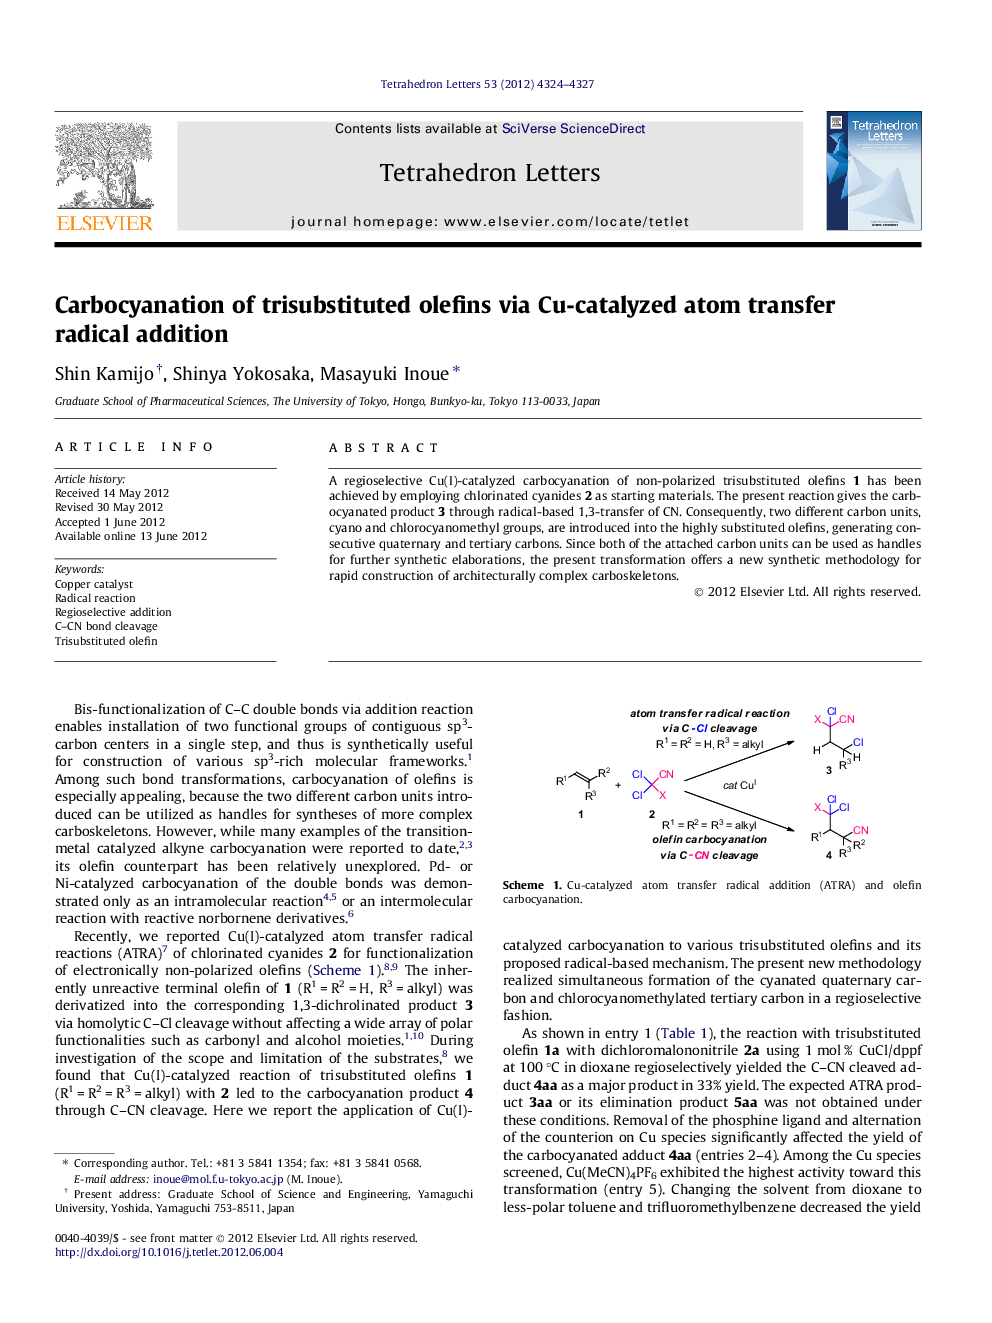 Carbocyanation of trisubstituted olefins via Cu-catalyzed atom transfer radical addition